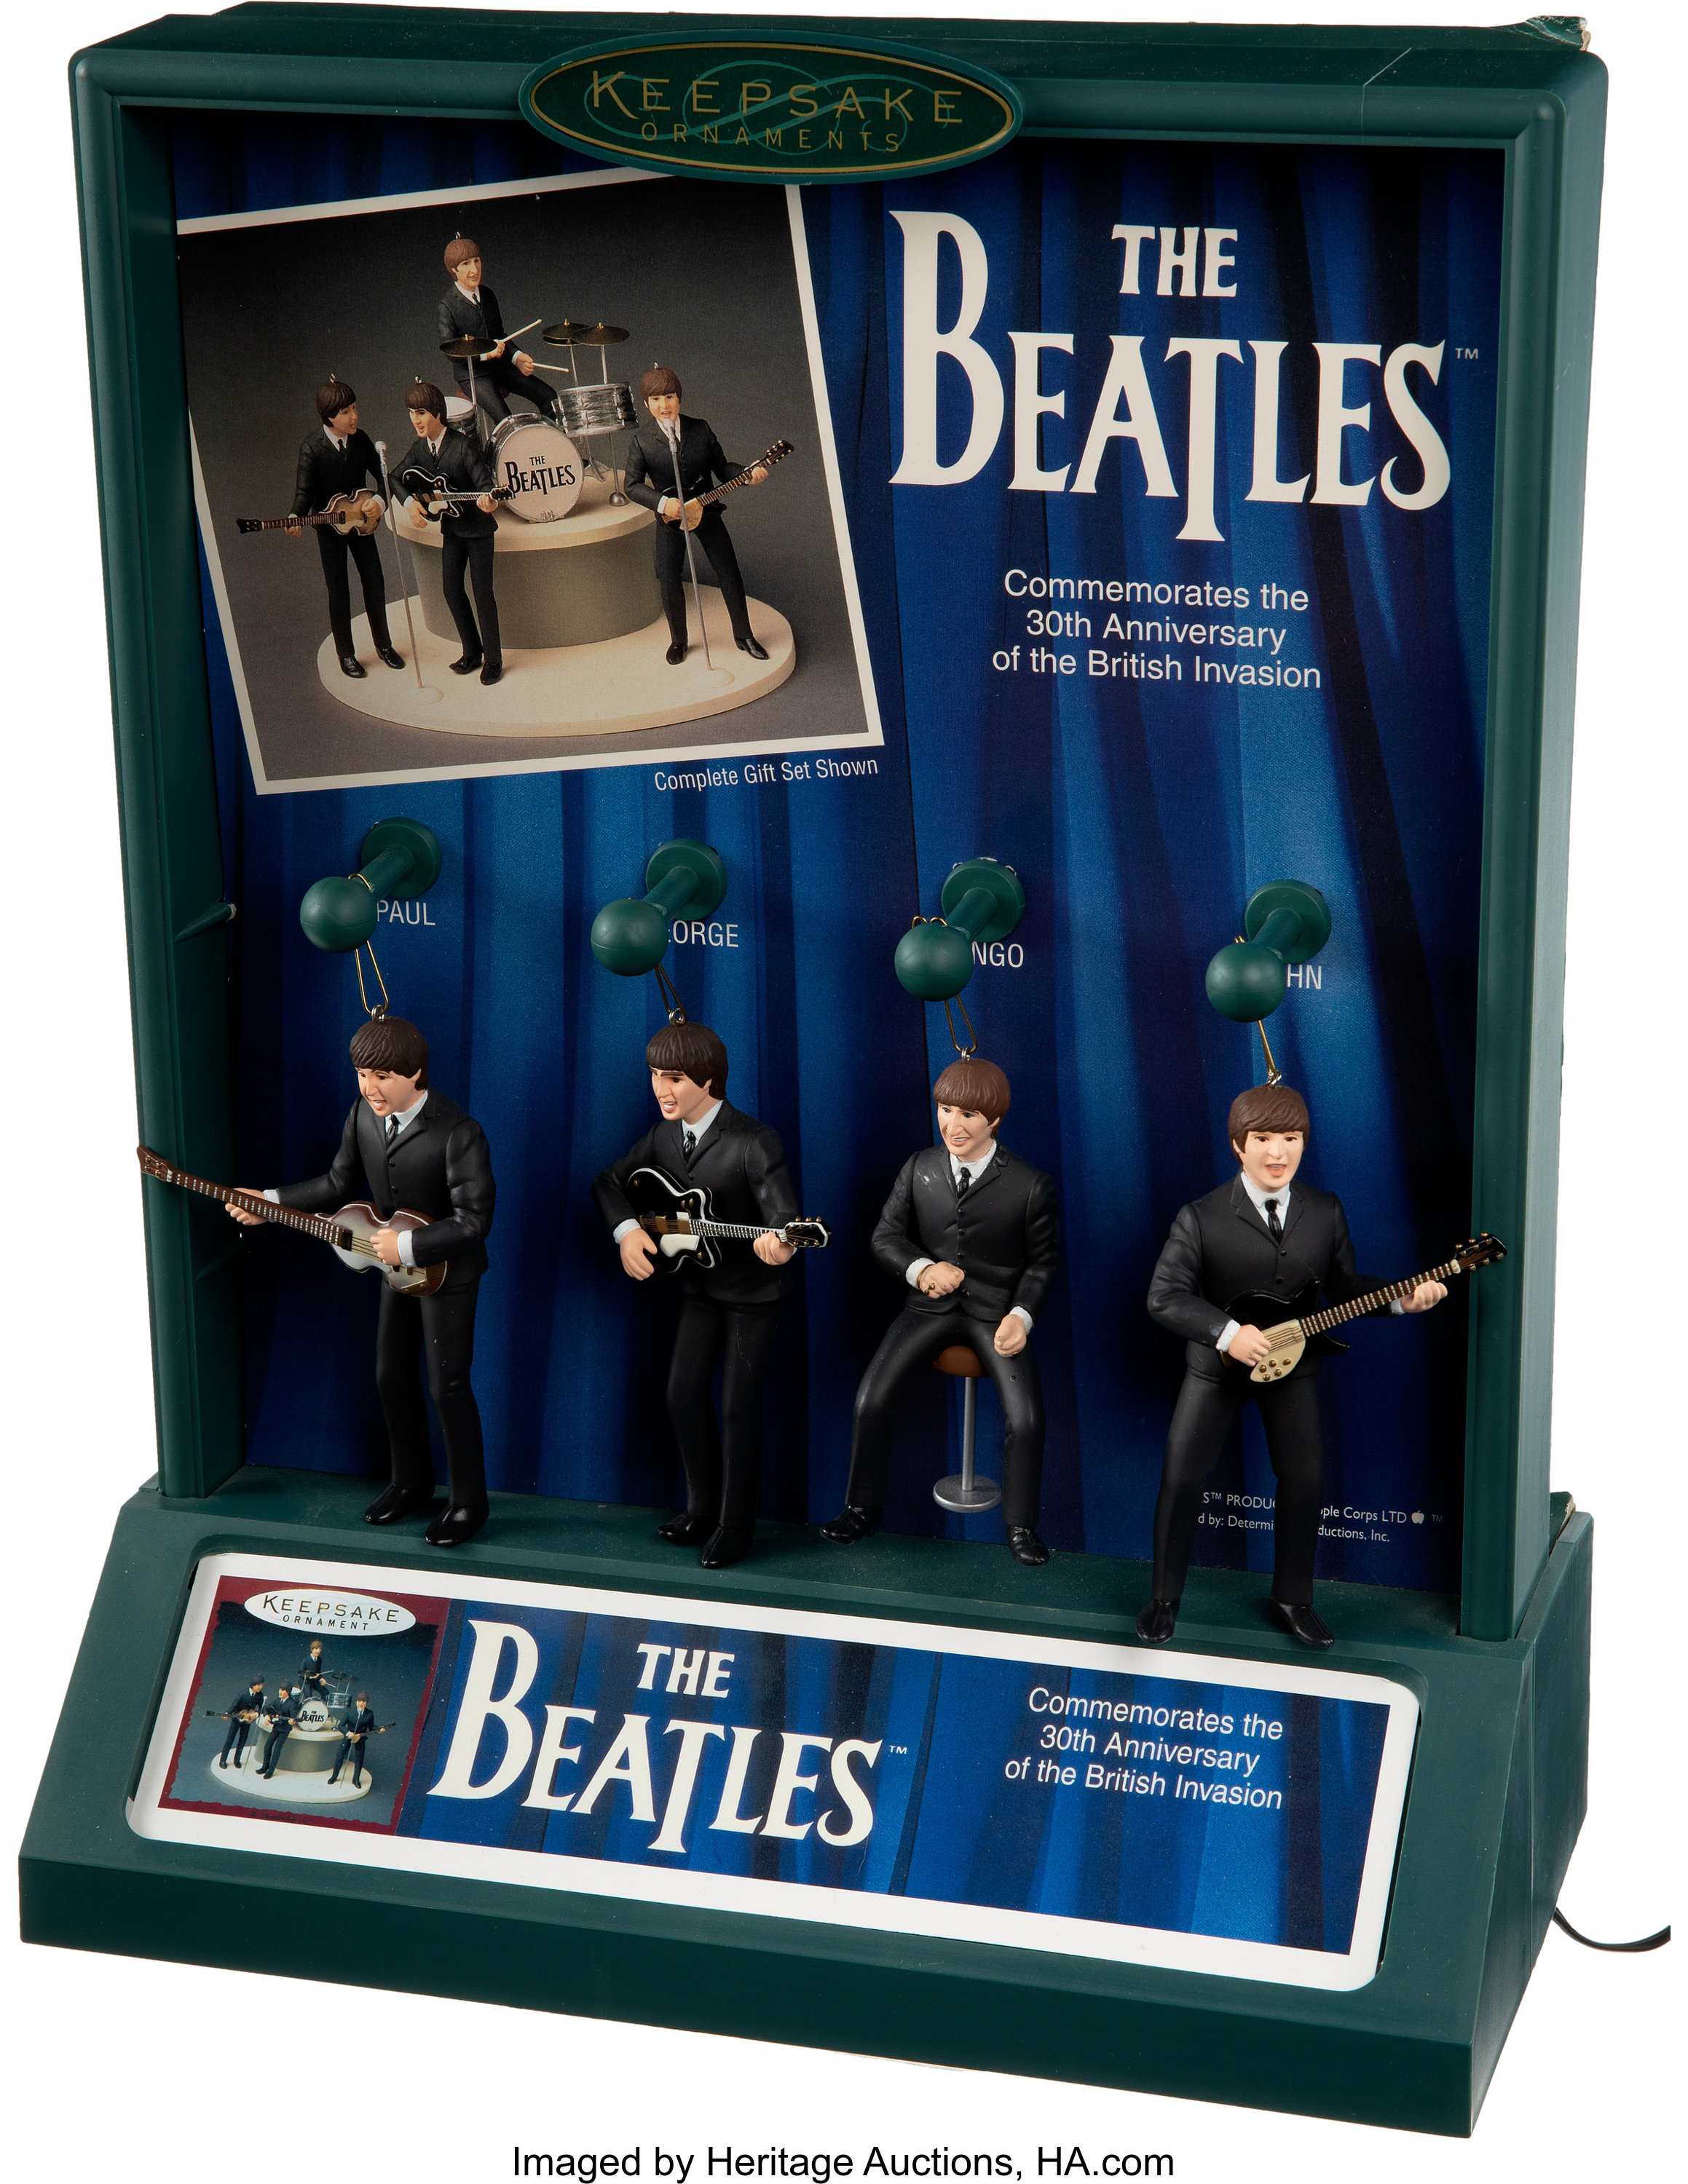 The Beatles Promotional 30th Anniversary Keepsake Ornament Display